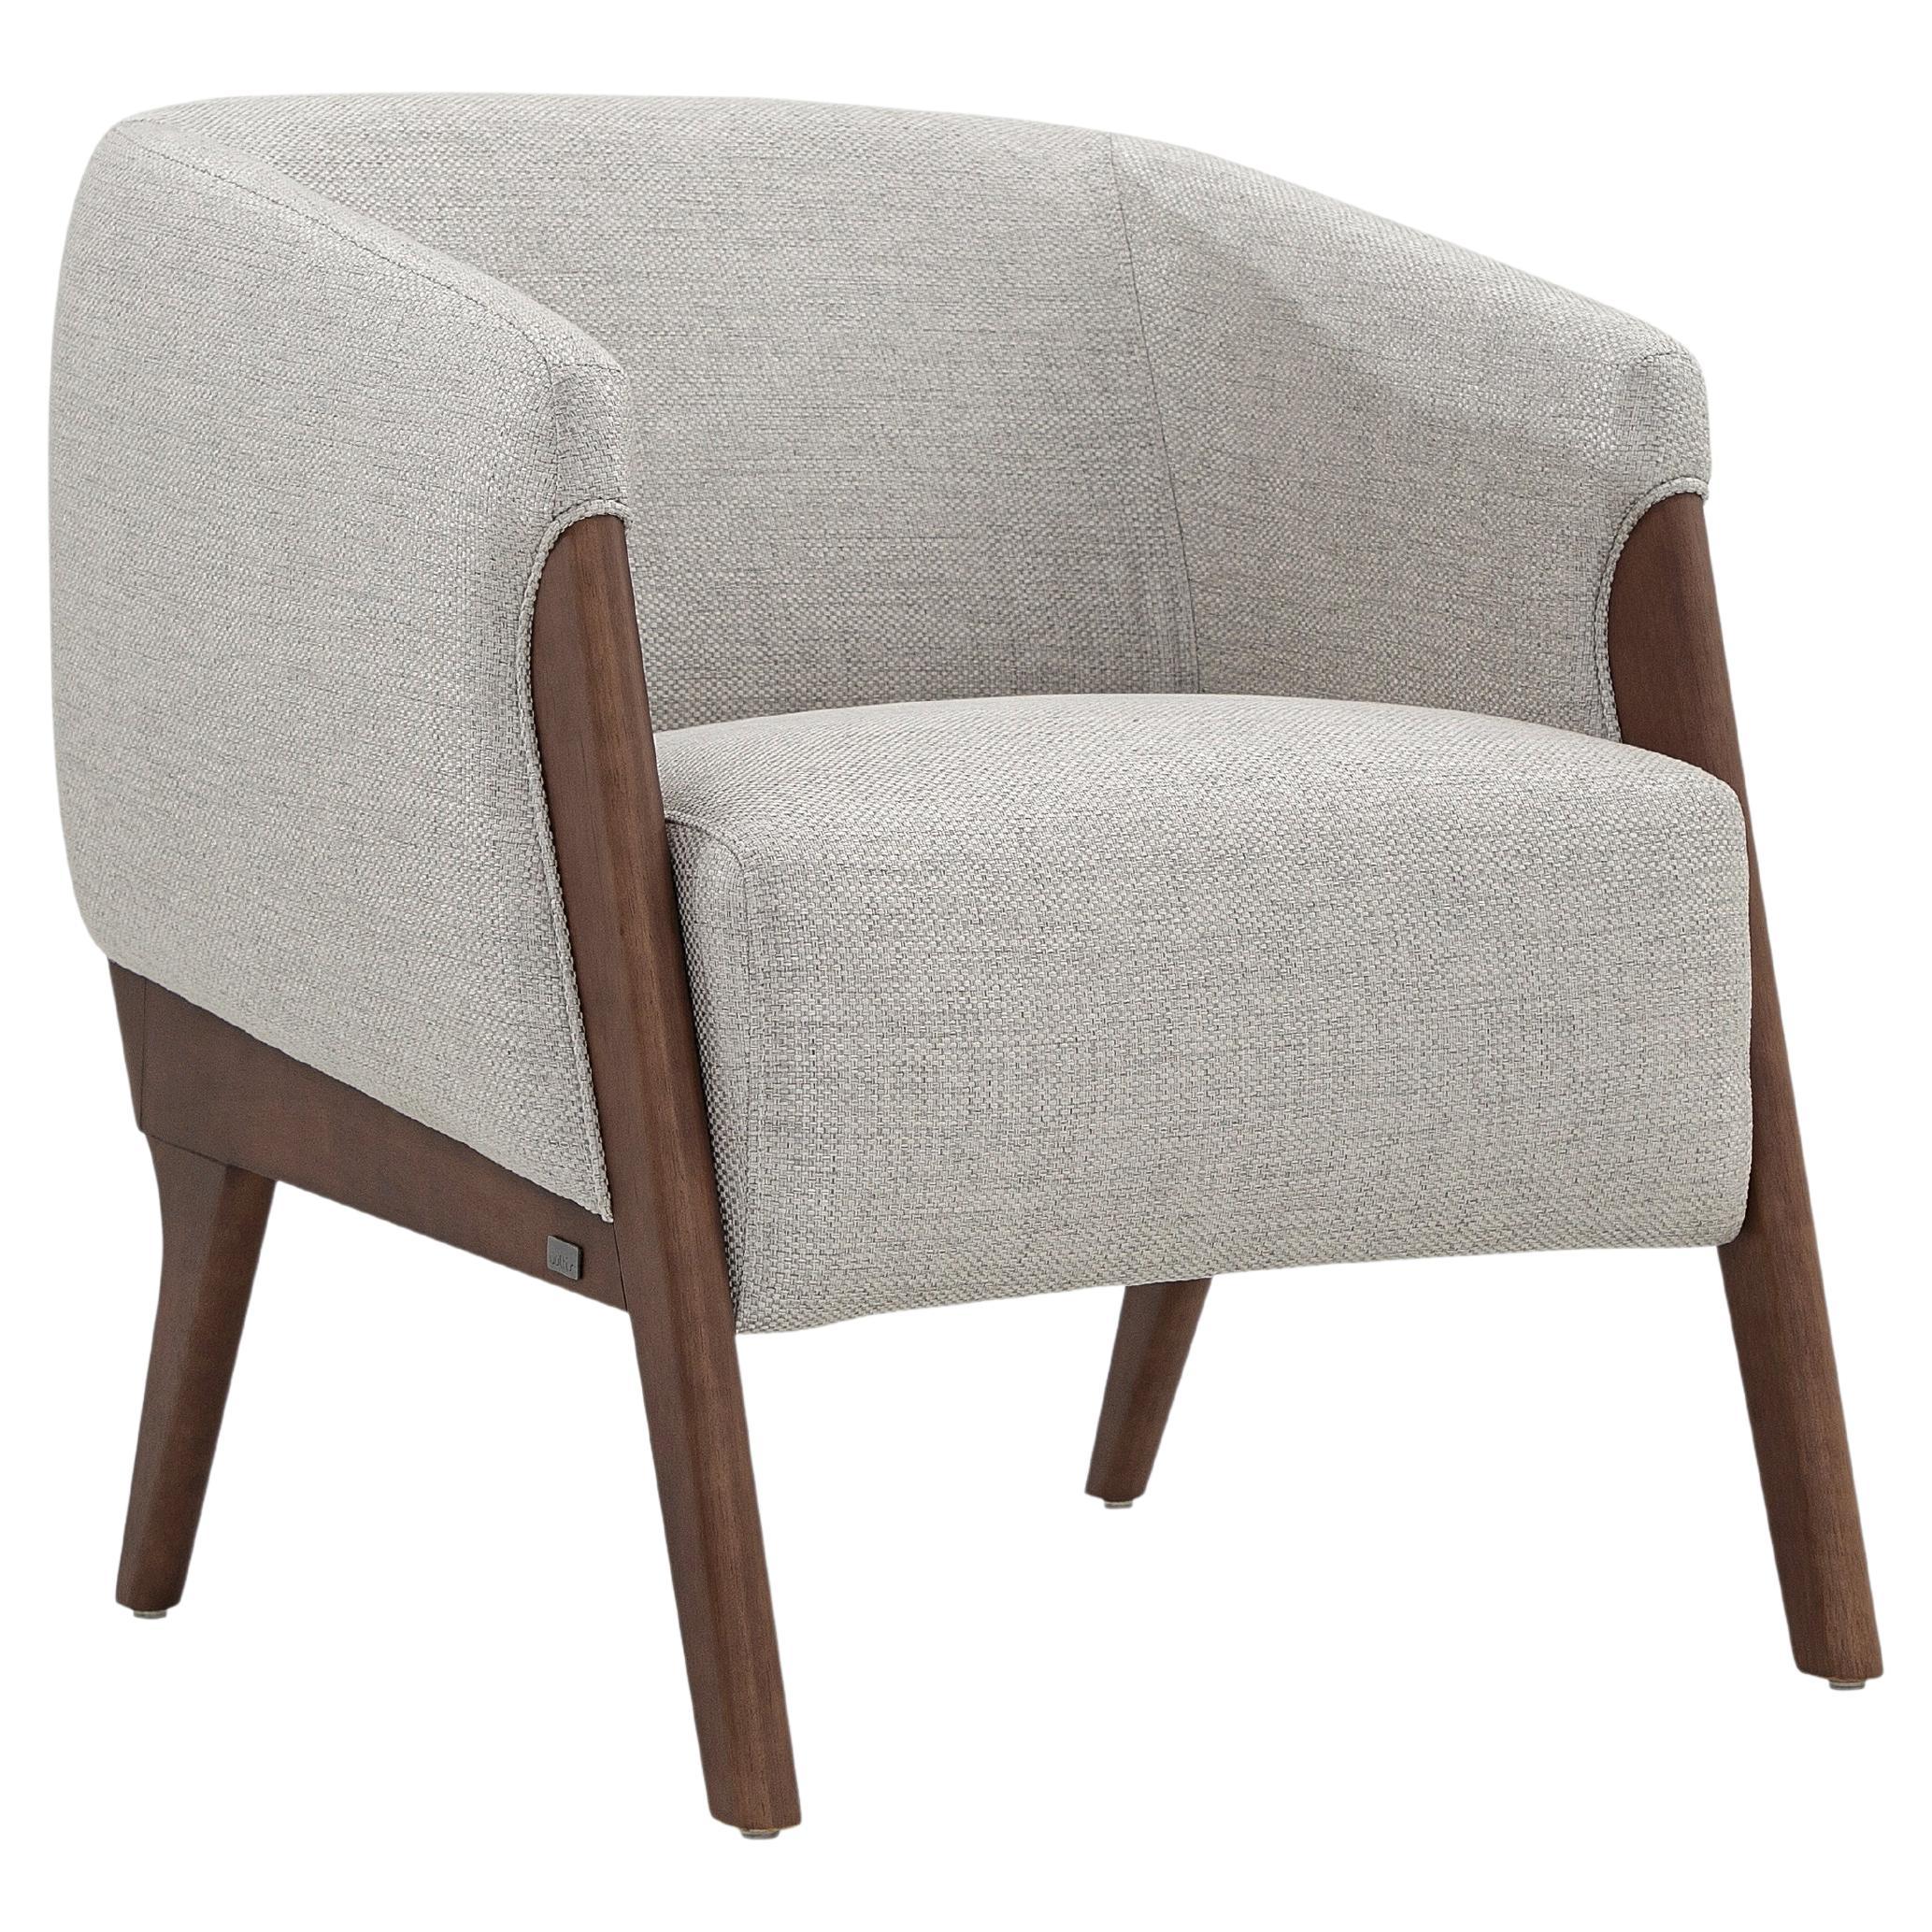 Abra Armchair in Light Gray Fabric and Walnut Wood Finish